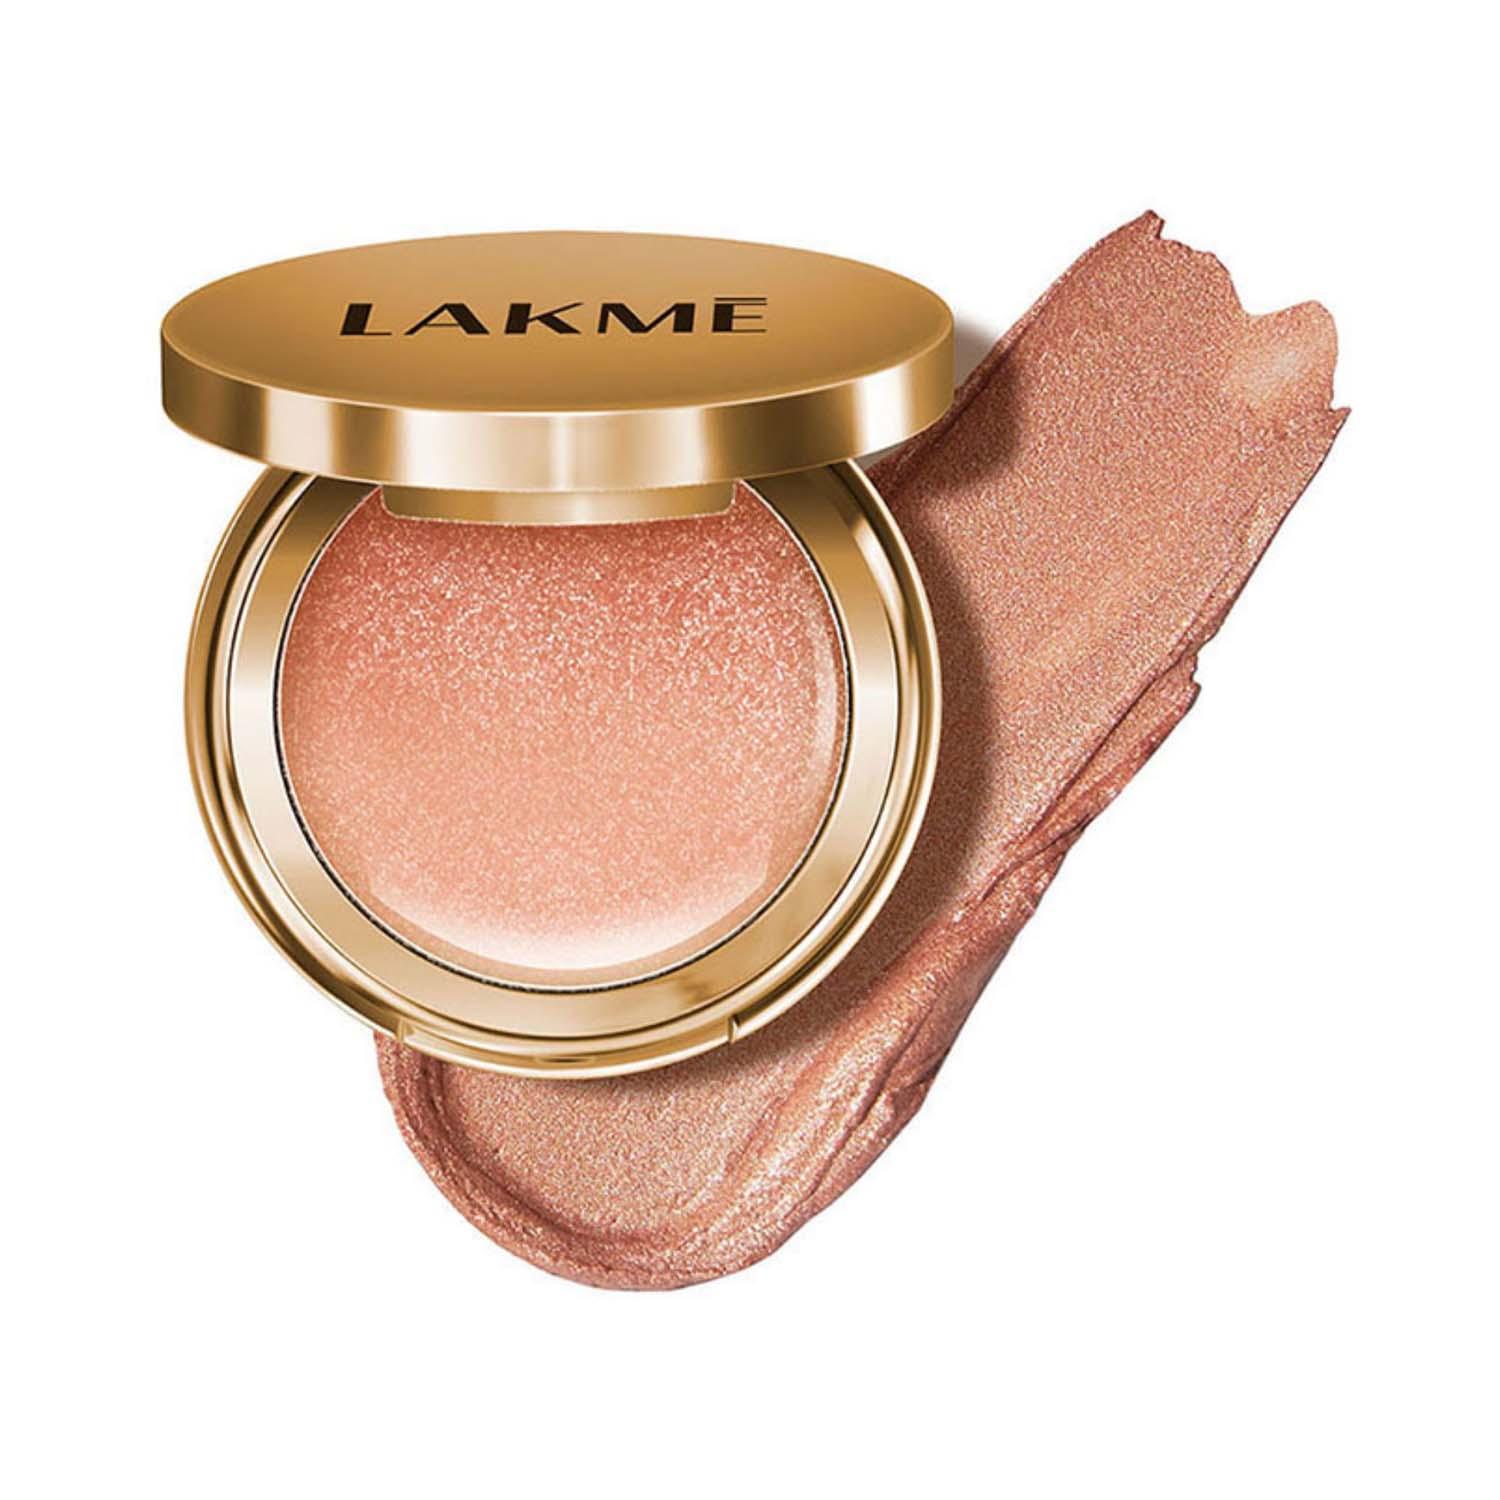 Lakme | Lakme 9 To 5 Powerplay Velvet Crème Highlighter - Copper Crush (9g)